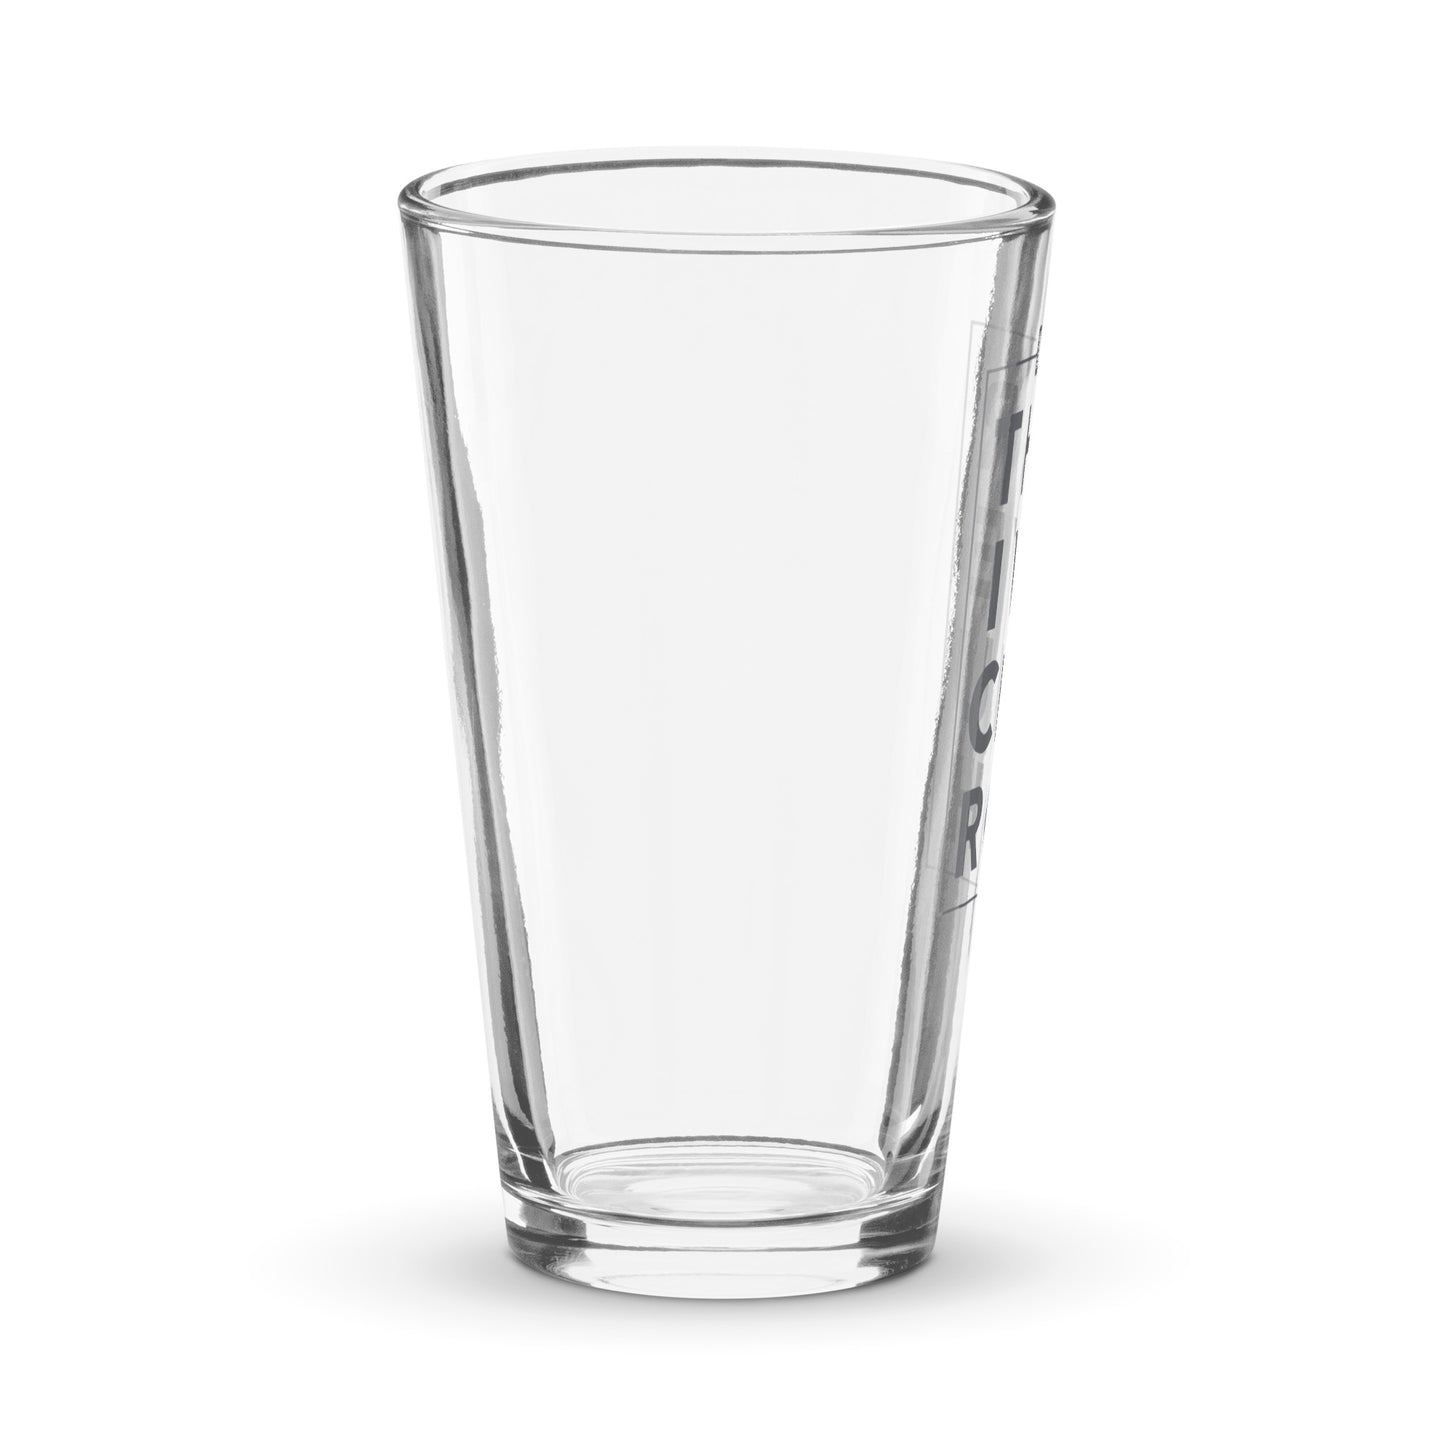 Thrive Shaker pint glass